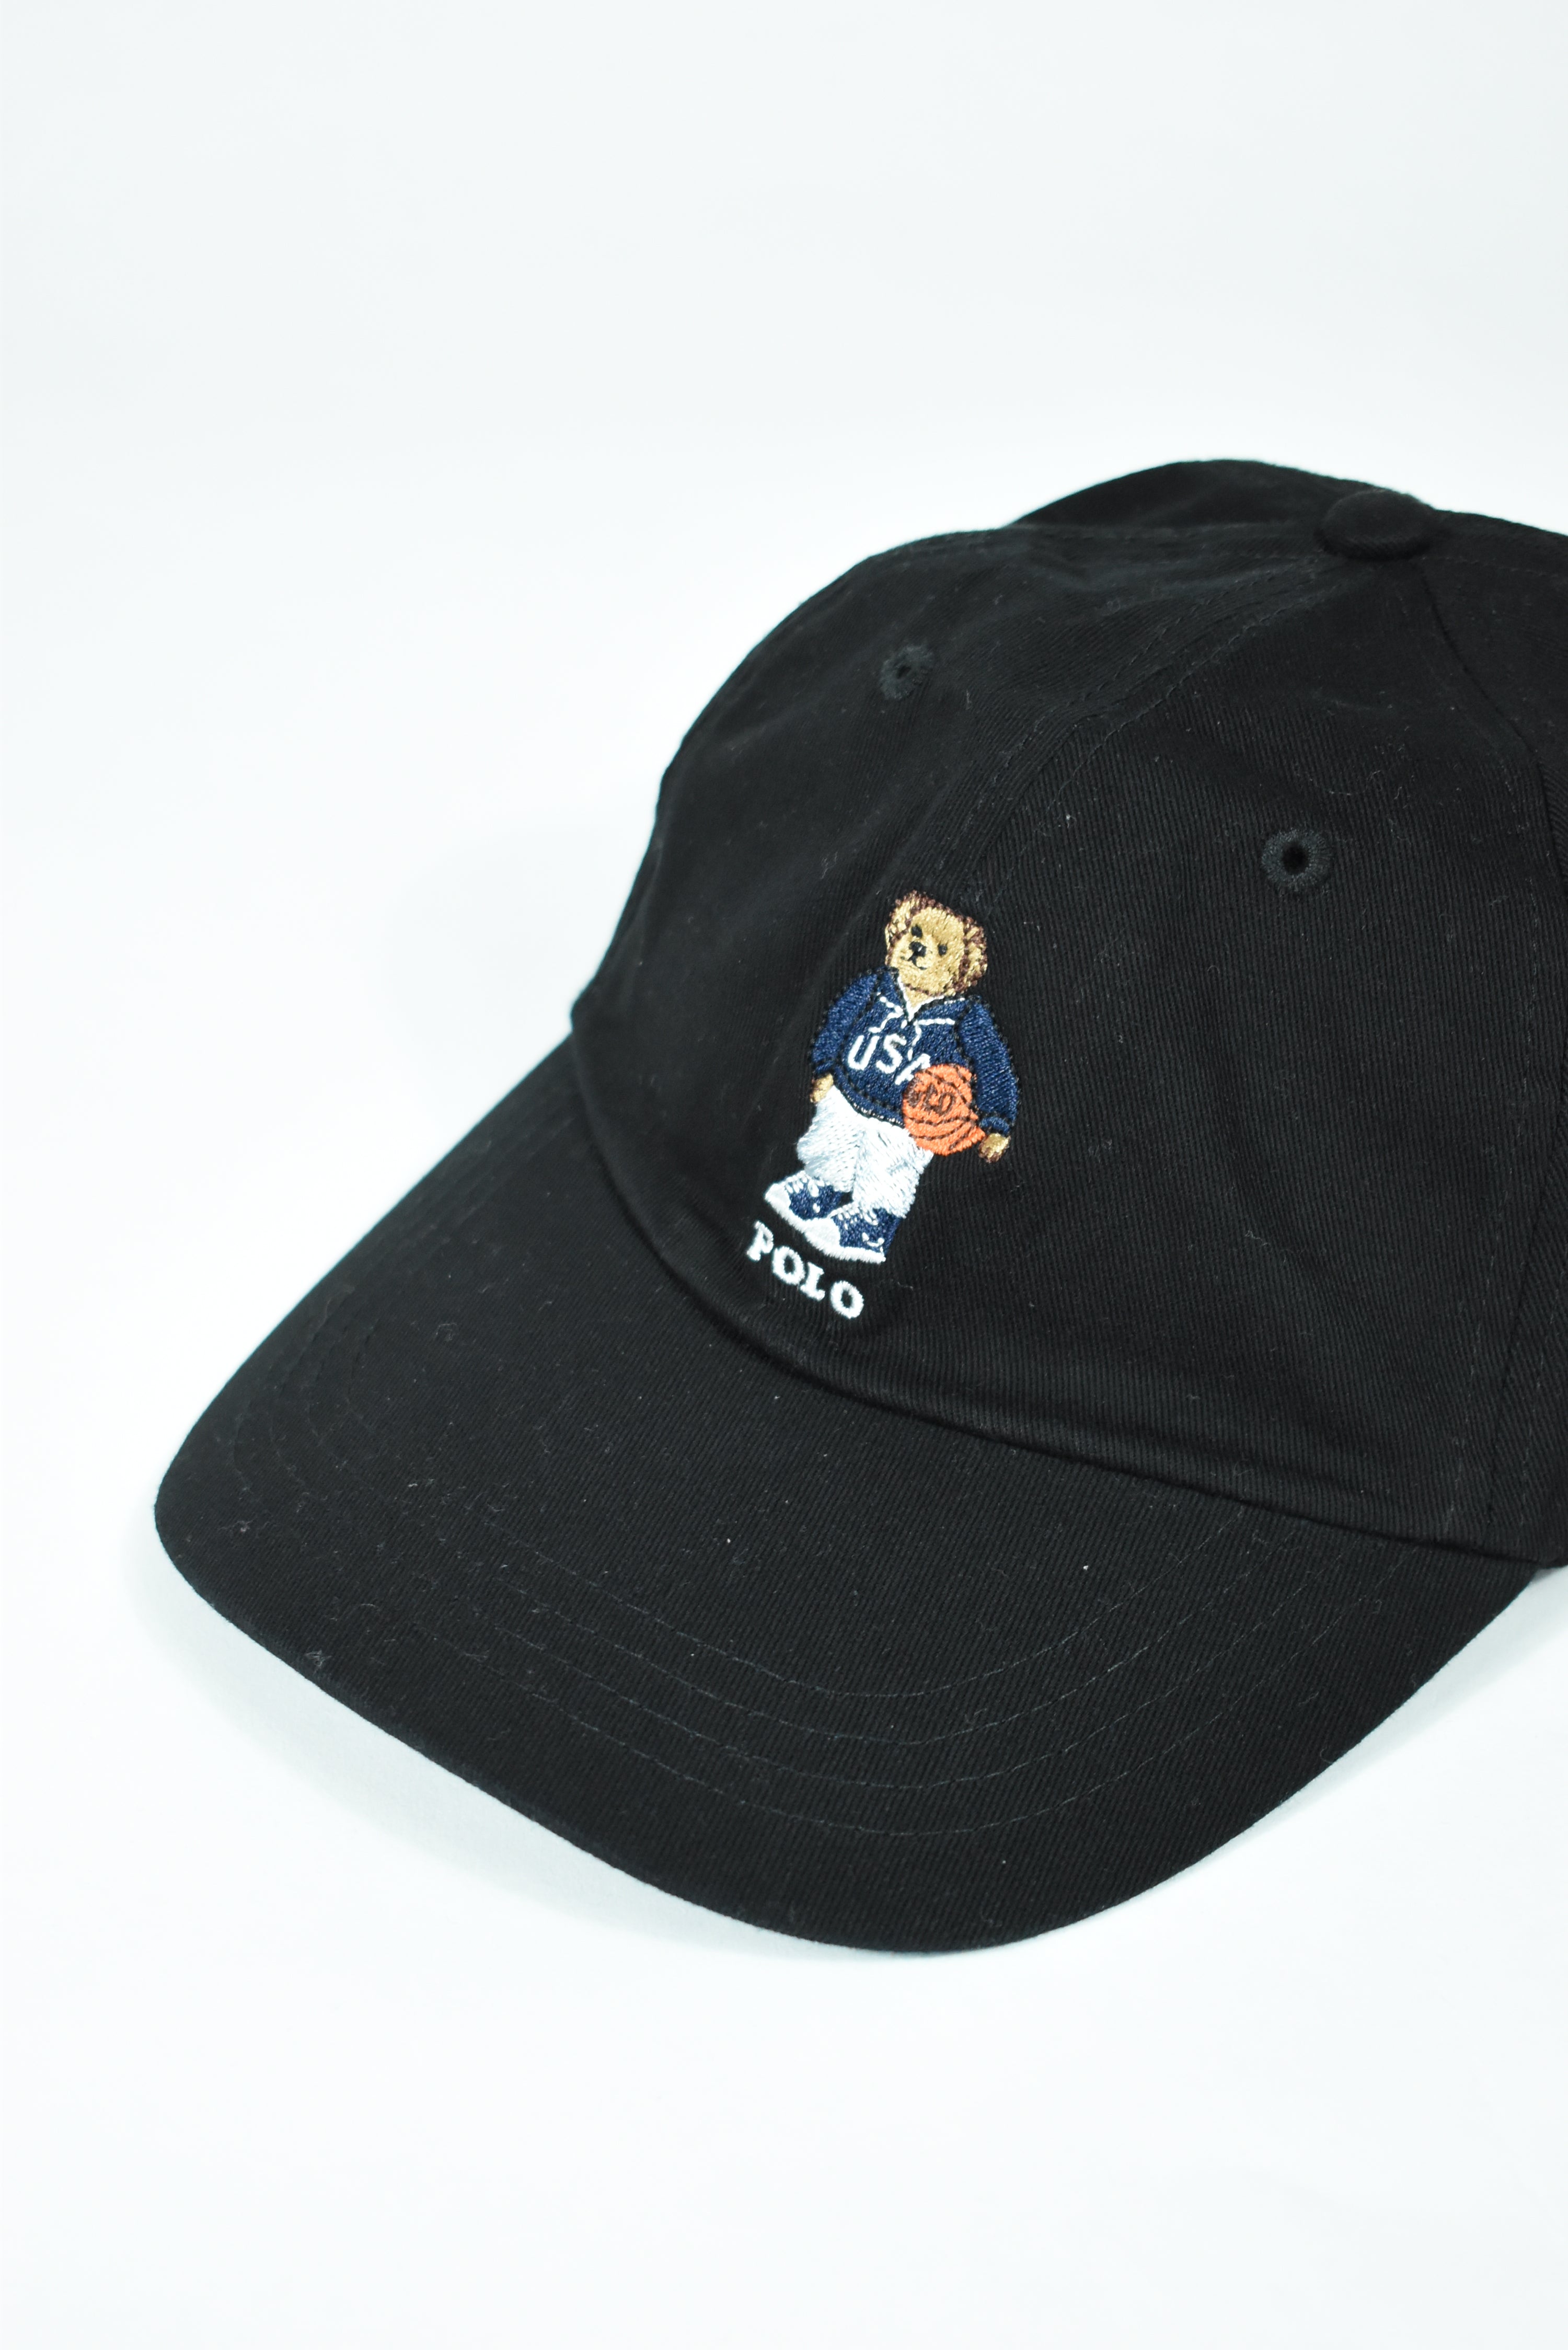 New Black RL Polo Bear Basketball Embroidery Cap